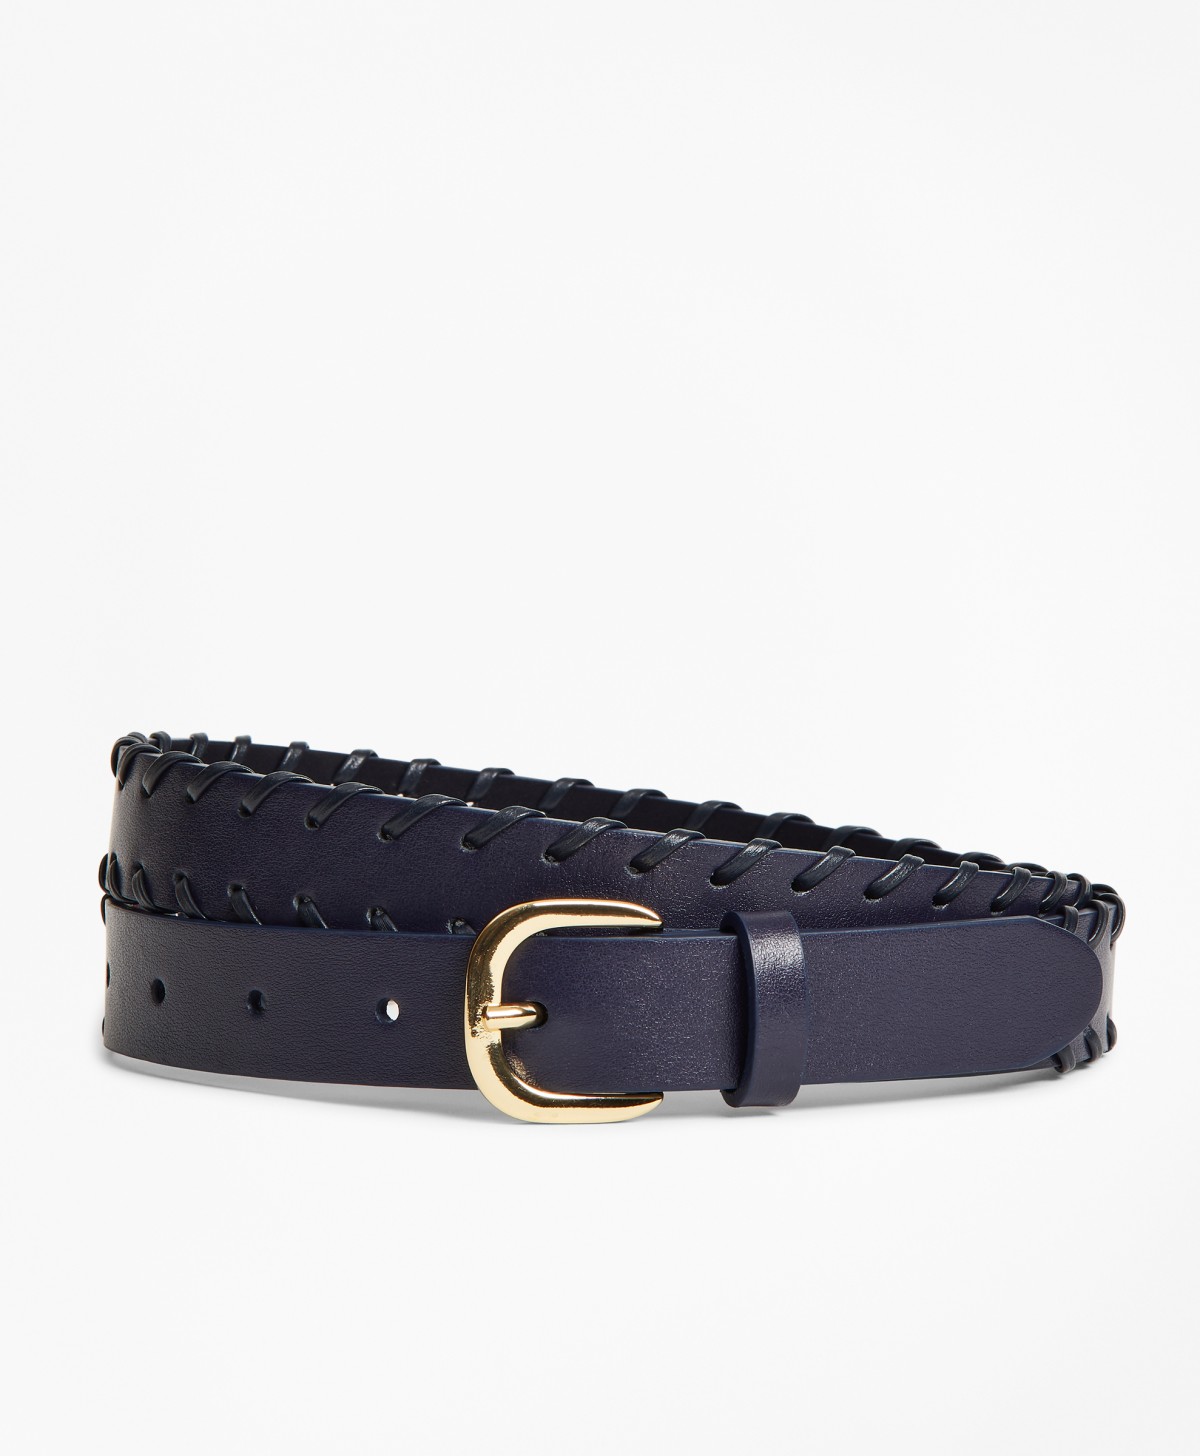 Leather Whip-Stitched Waist Belt